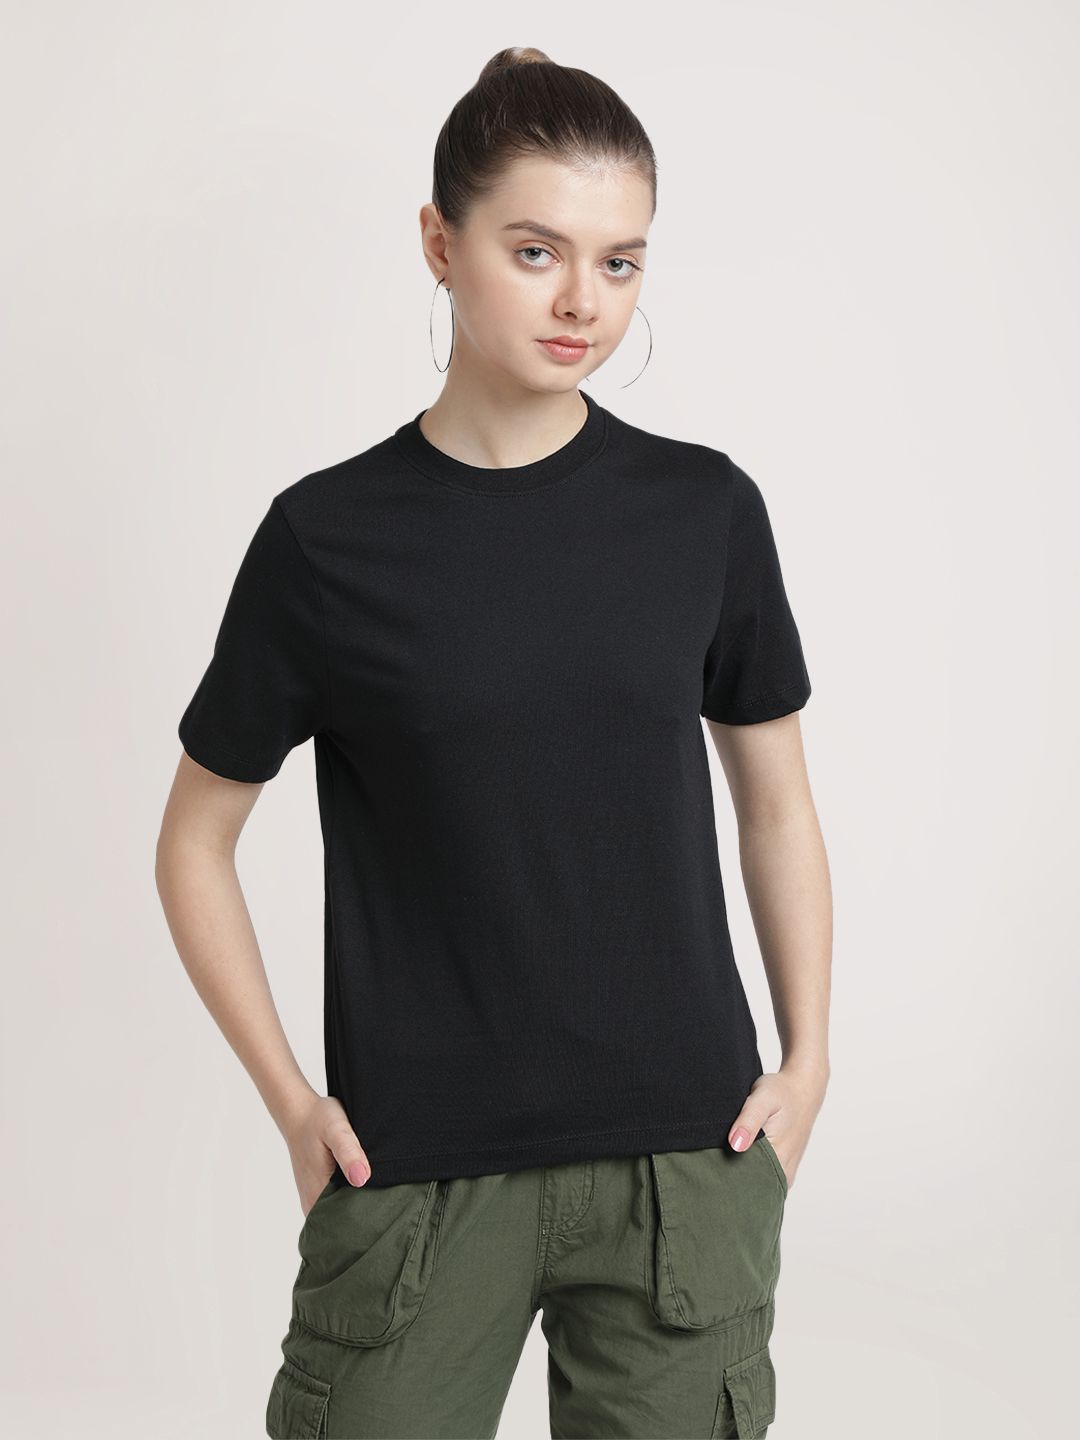     			Bene Kleed Black Cotton Blend Slim Fit Women's T-Shirt ( Pack of 1 )